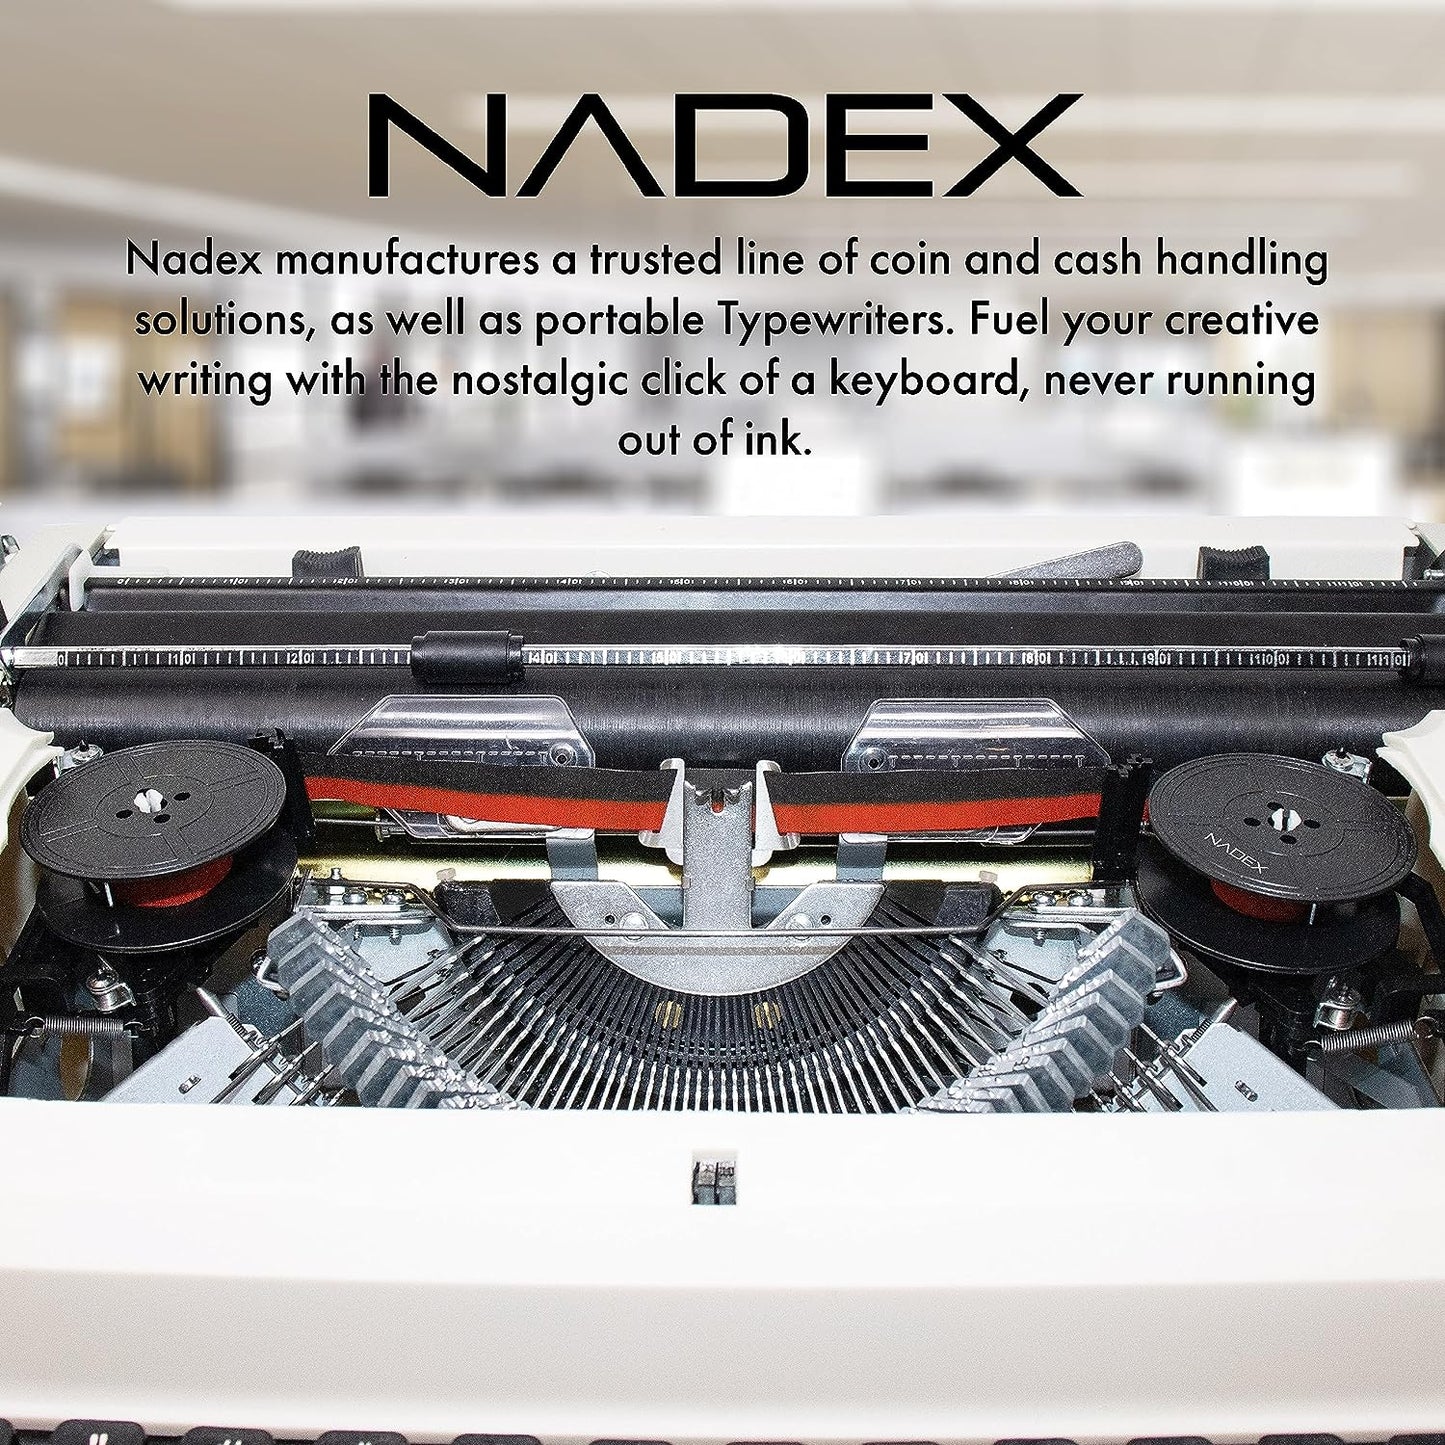 Nadex Typewriter Ribbon Twin Spool for Vintage Manual Typewriters, Red/Black